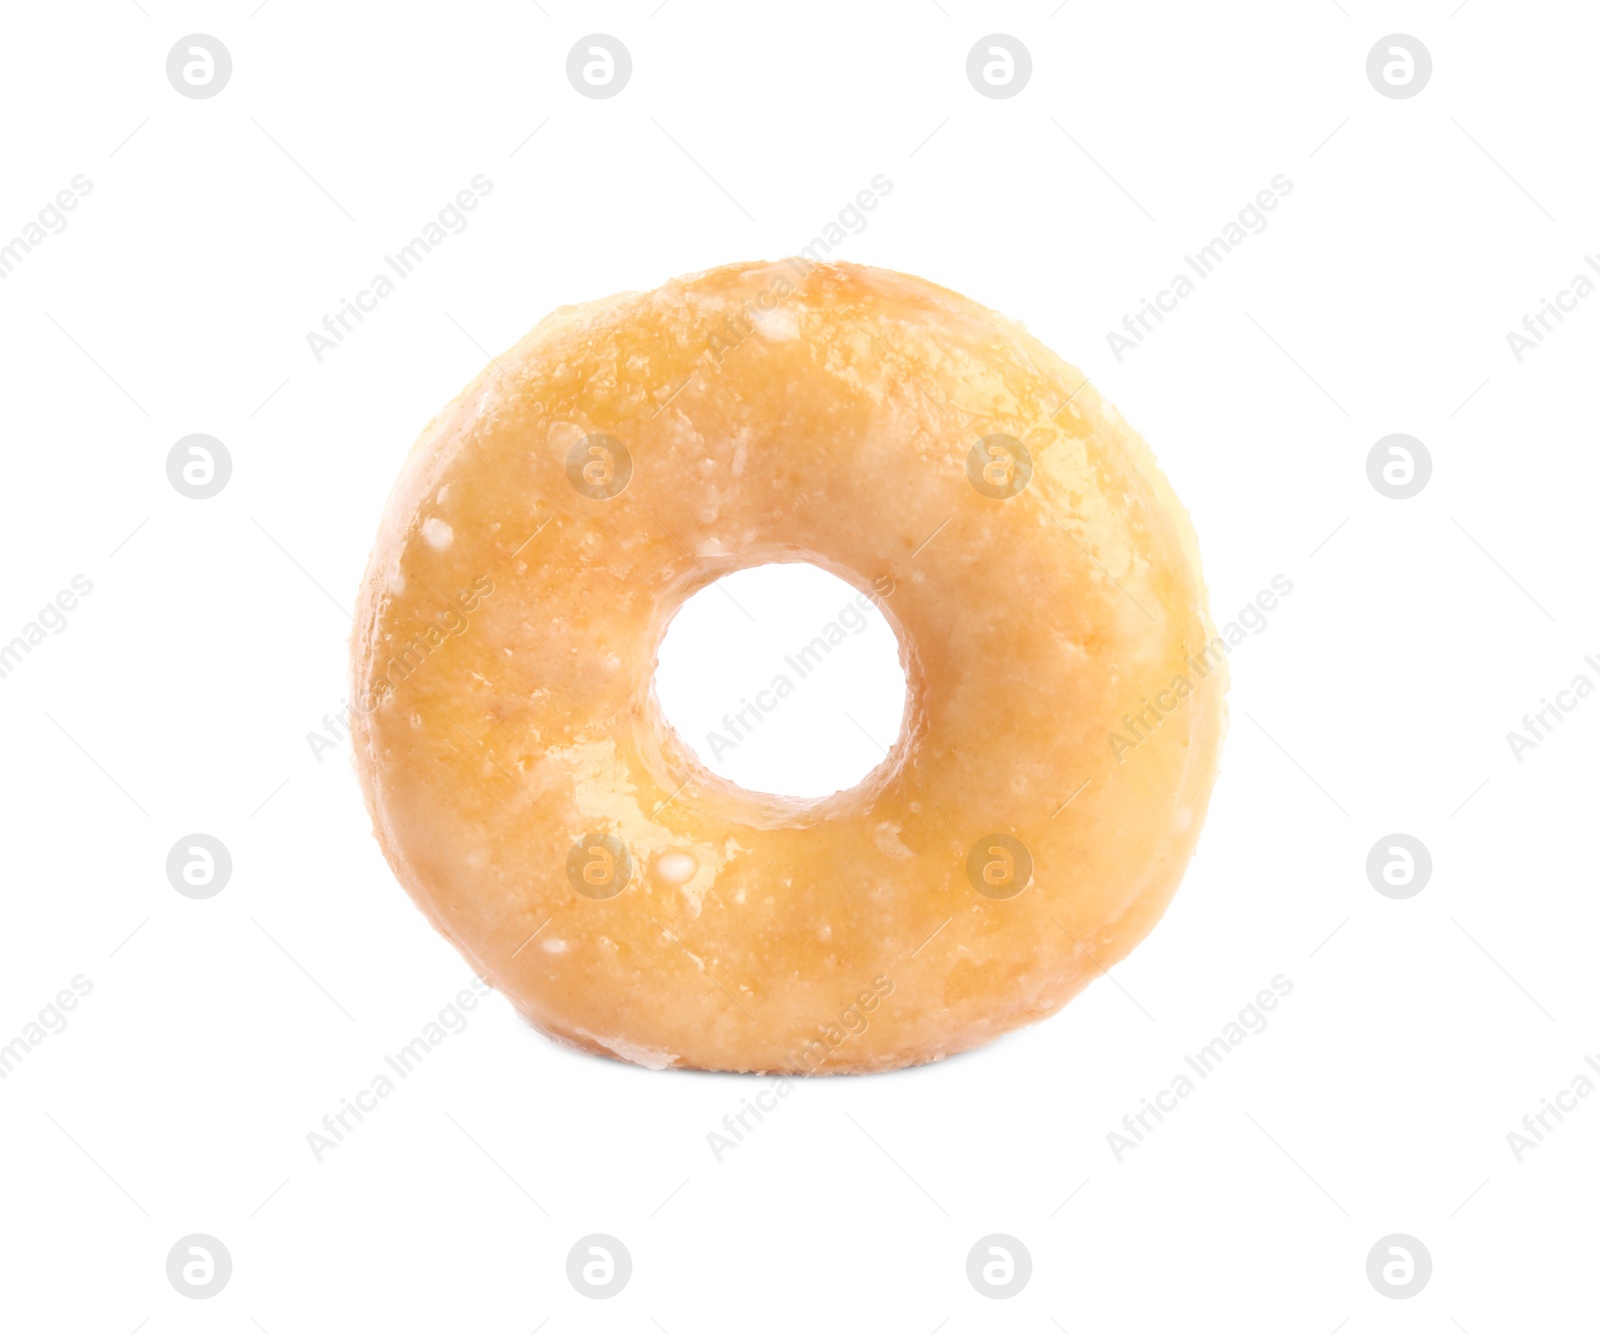 Photo of Sweet delicious glazed donut isolated on white